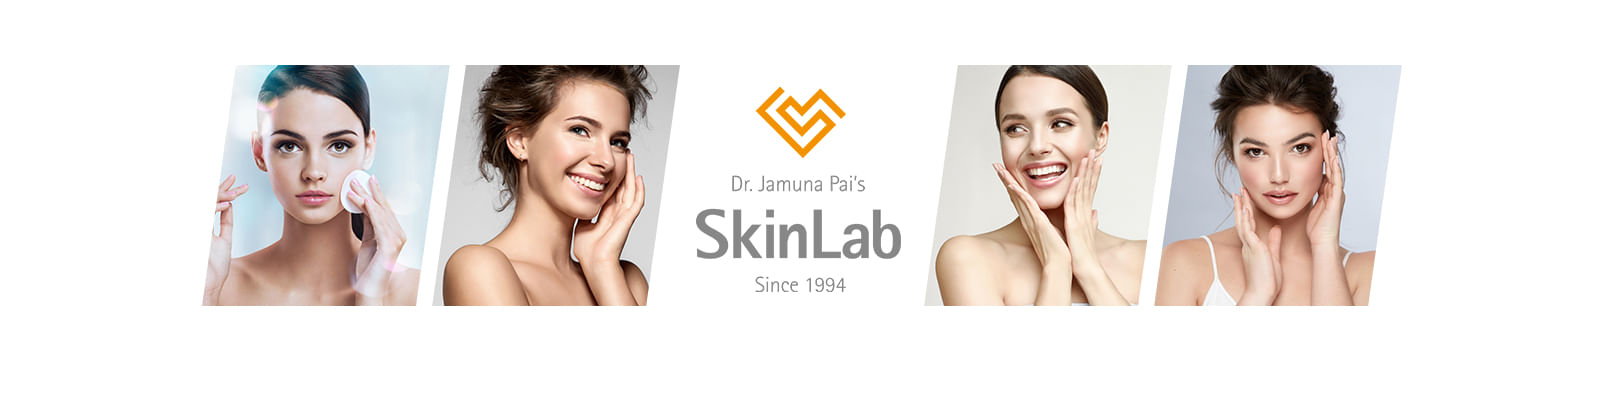 Skinlab By Dr. Jamuna Pai